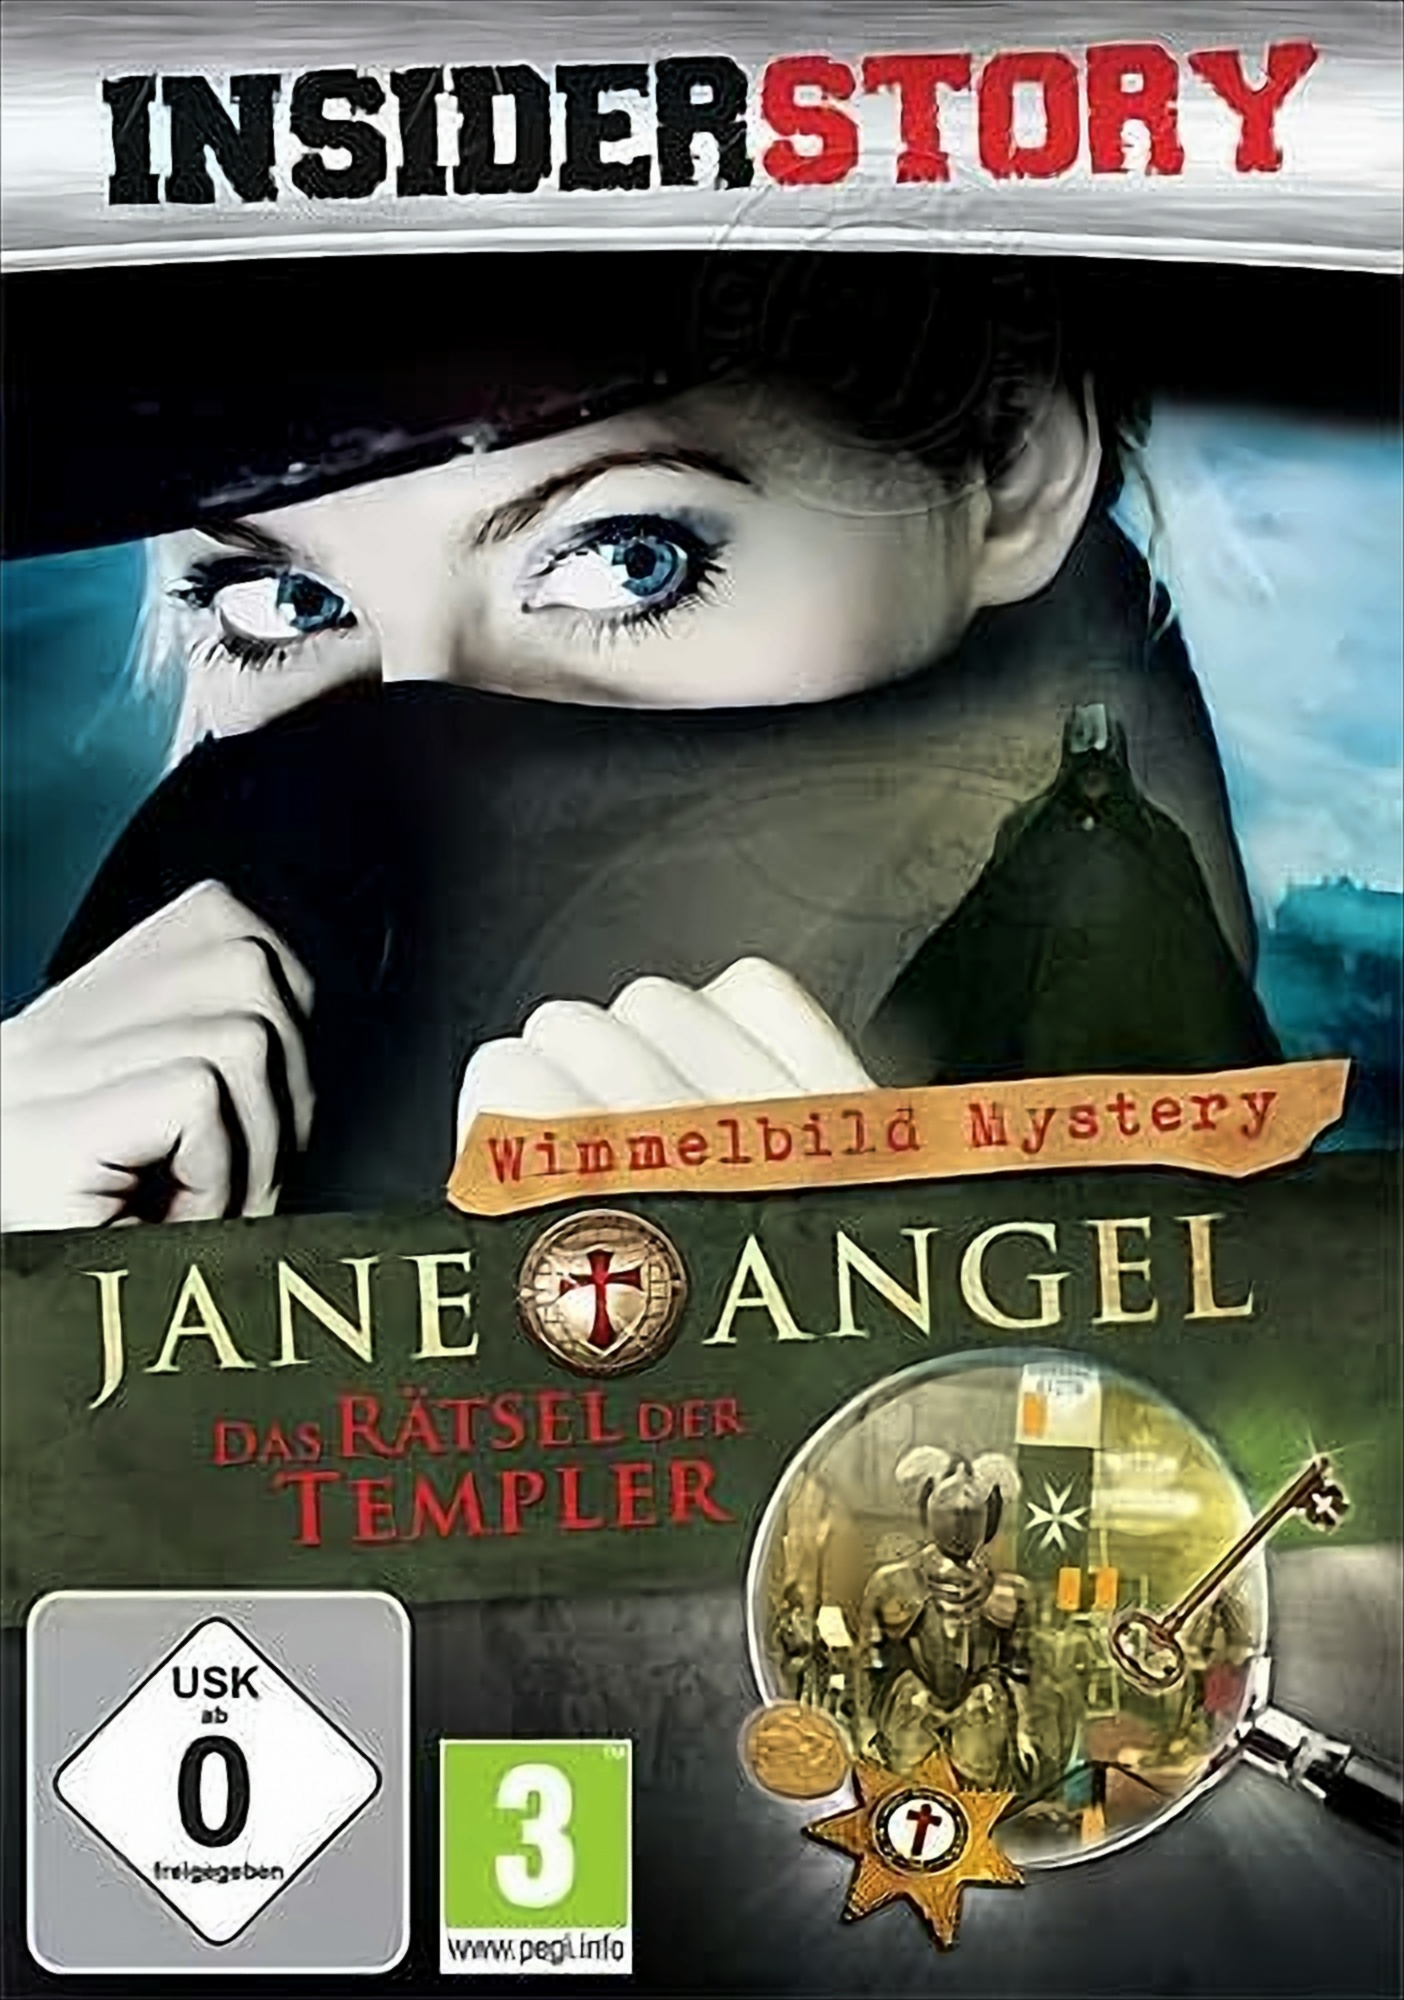 Rätsel Story: Templer der Angel - Das [PC] - Jane Insider